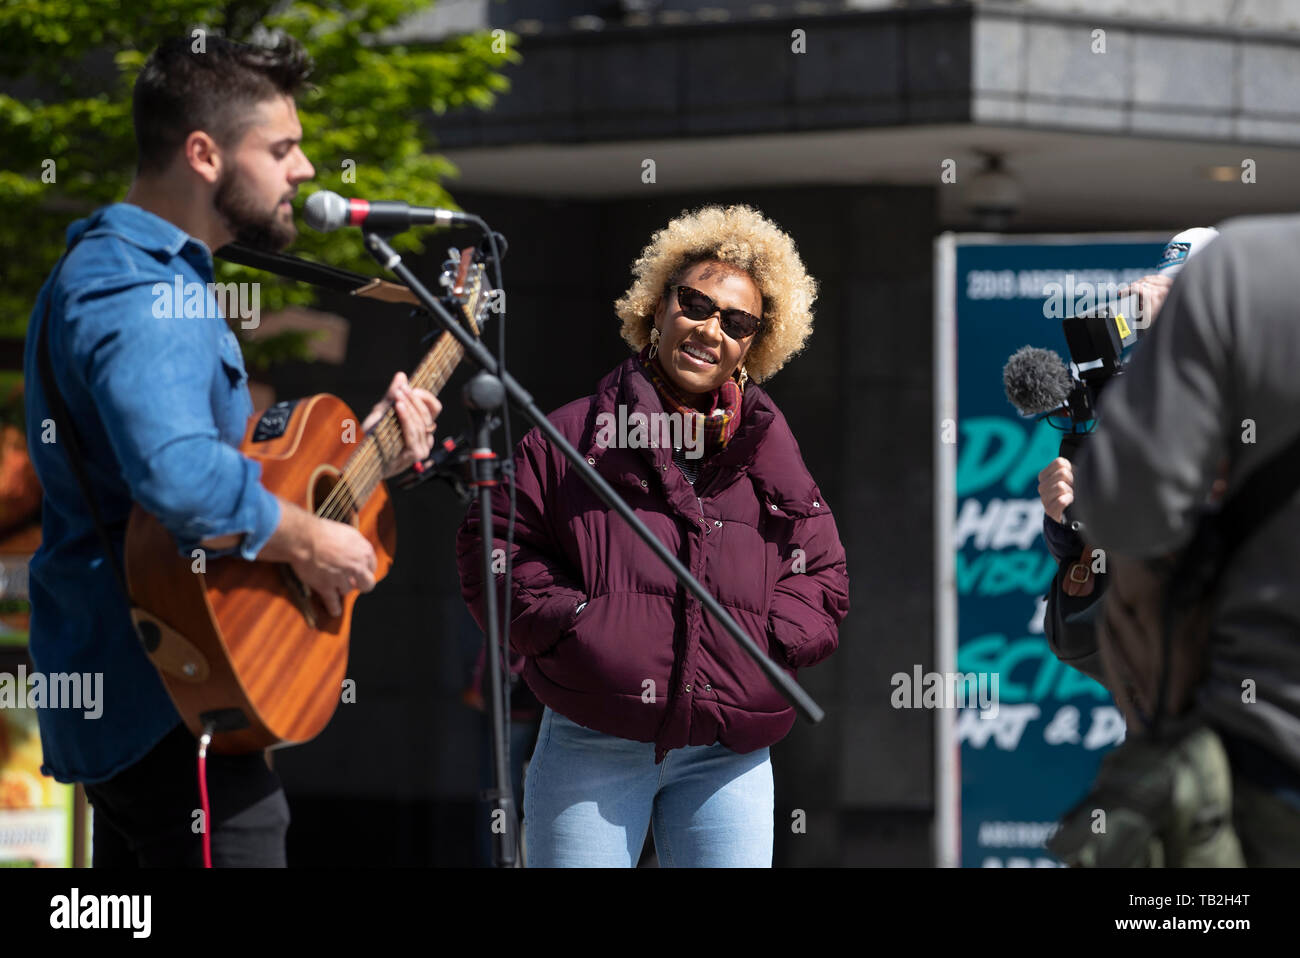 Singer-songwriter Emeli Sande with busking musician Finn Henderson Palmer during filming in her home city of Aberdeen for a new BBC Scotland series 'Emeli Sande's Street Symphony'. Stock Photo